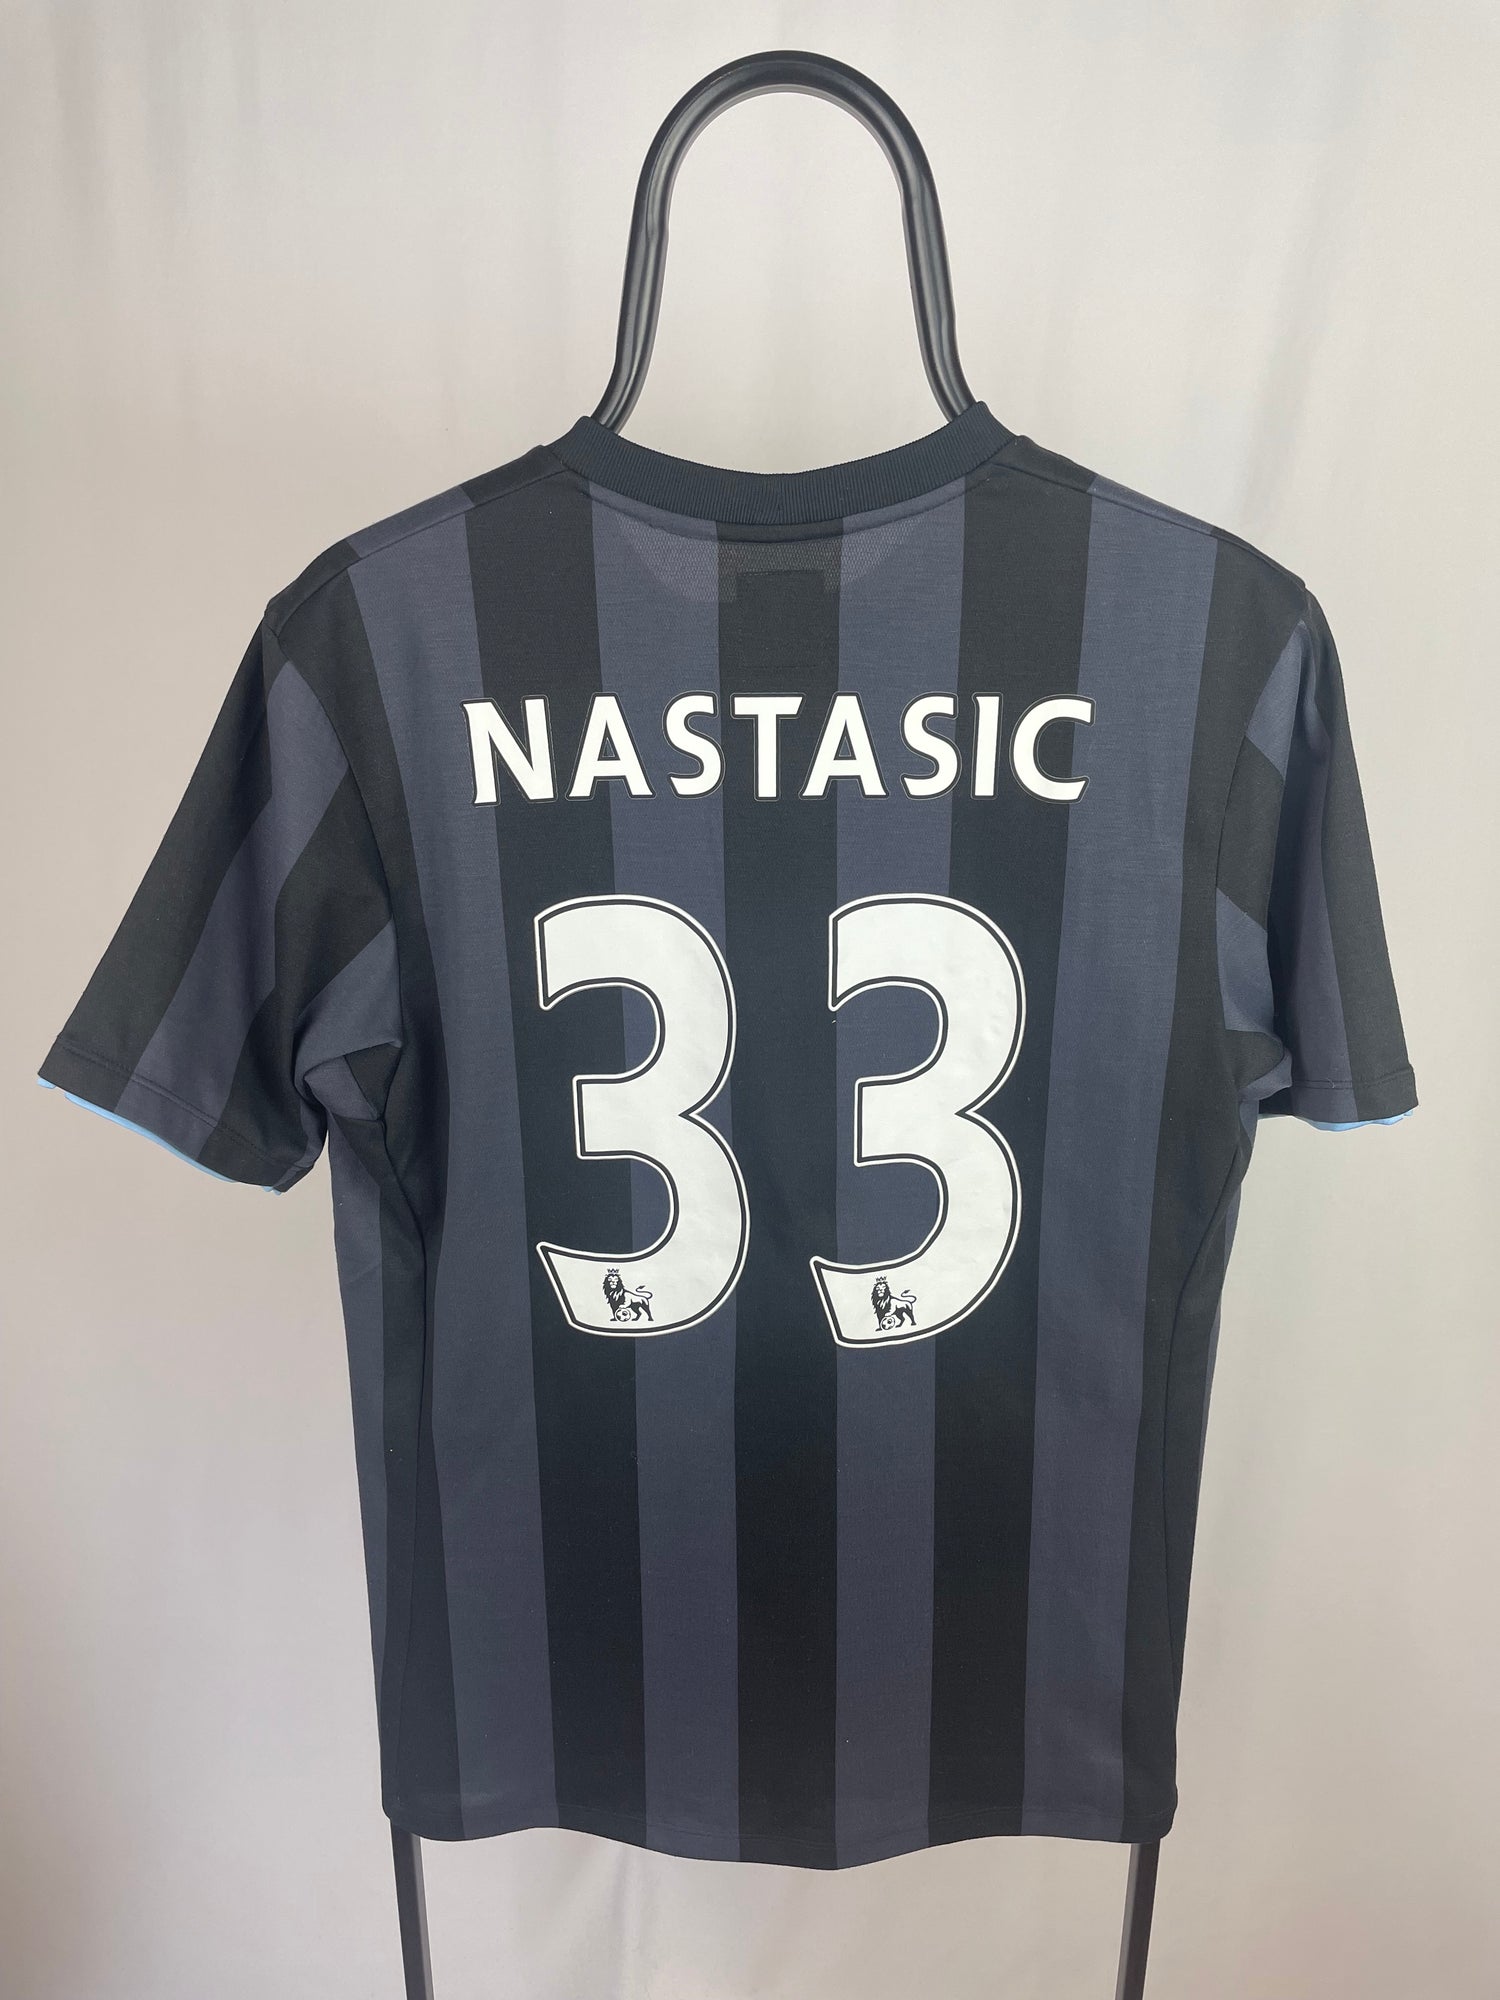 Nastasic Manchester City 12/13 away shirt - M